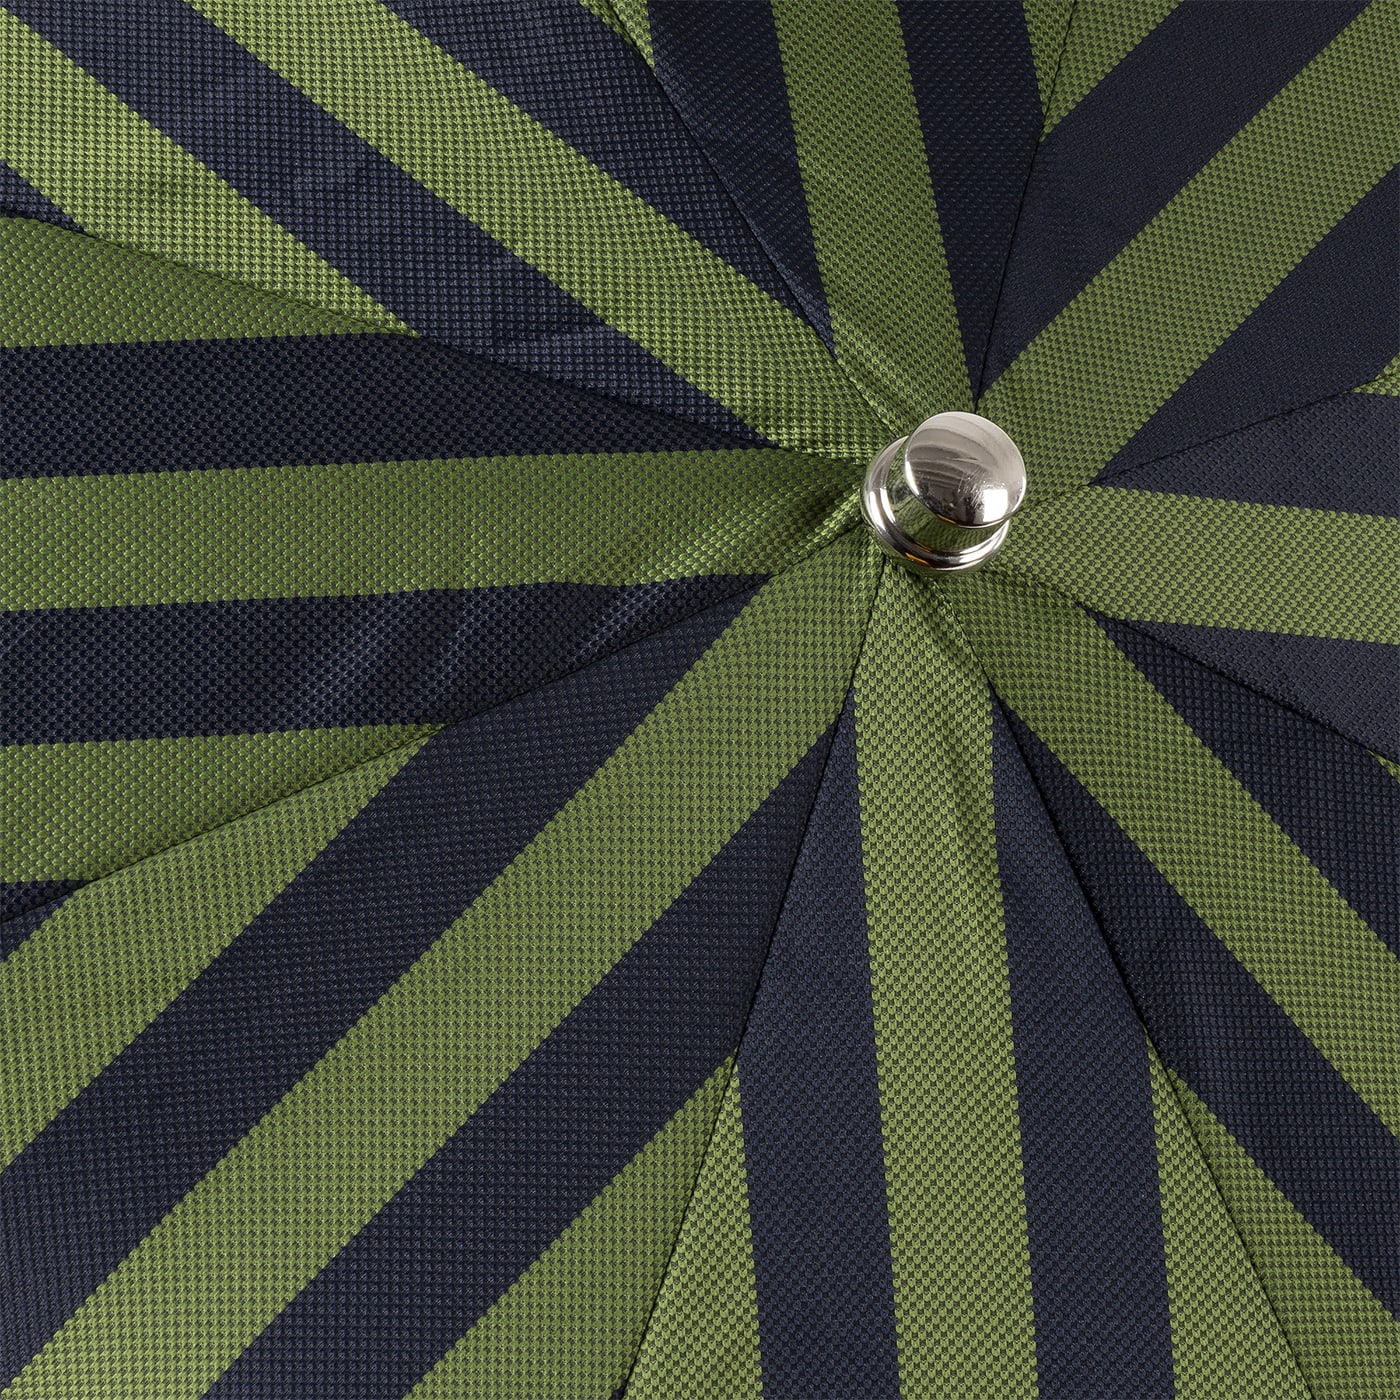 Green and Blue Stripe Foldable Umbrella - Francesco Maglia Milano